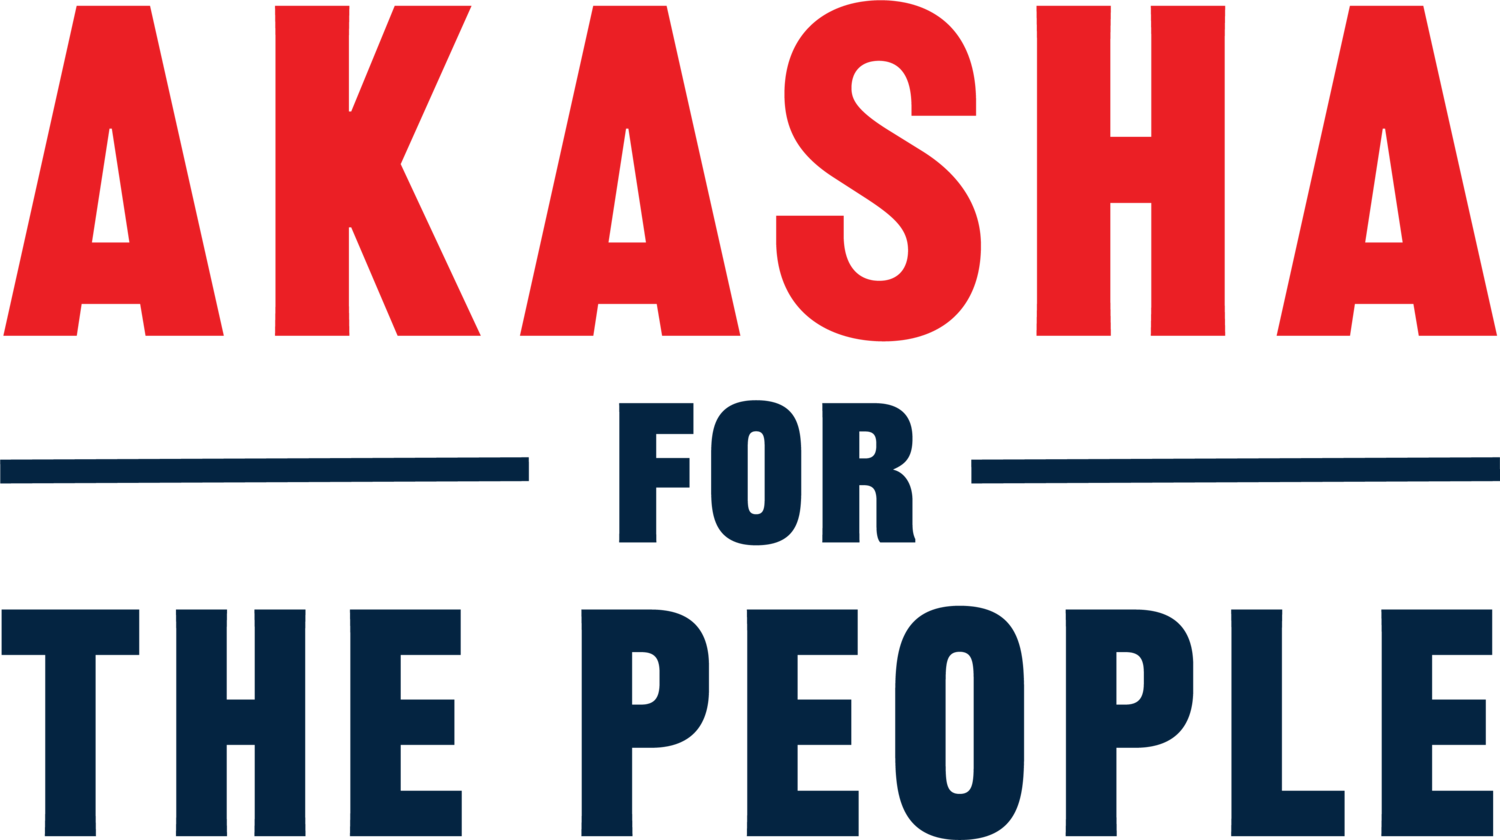 Akasha for the People